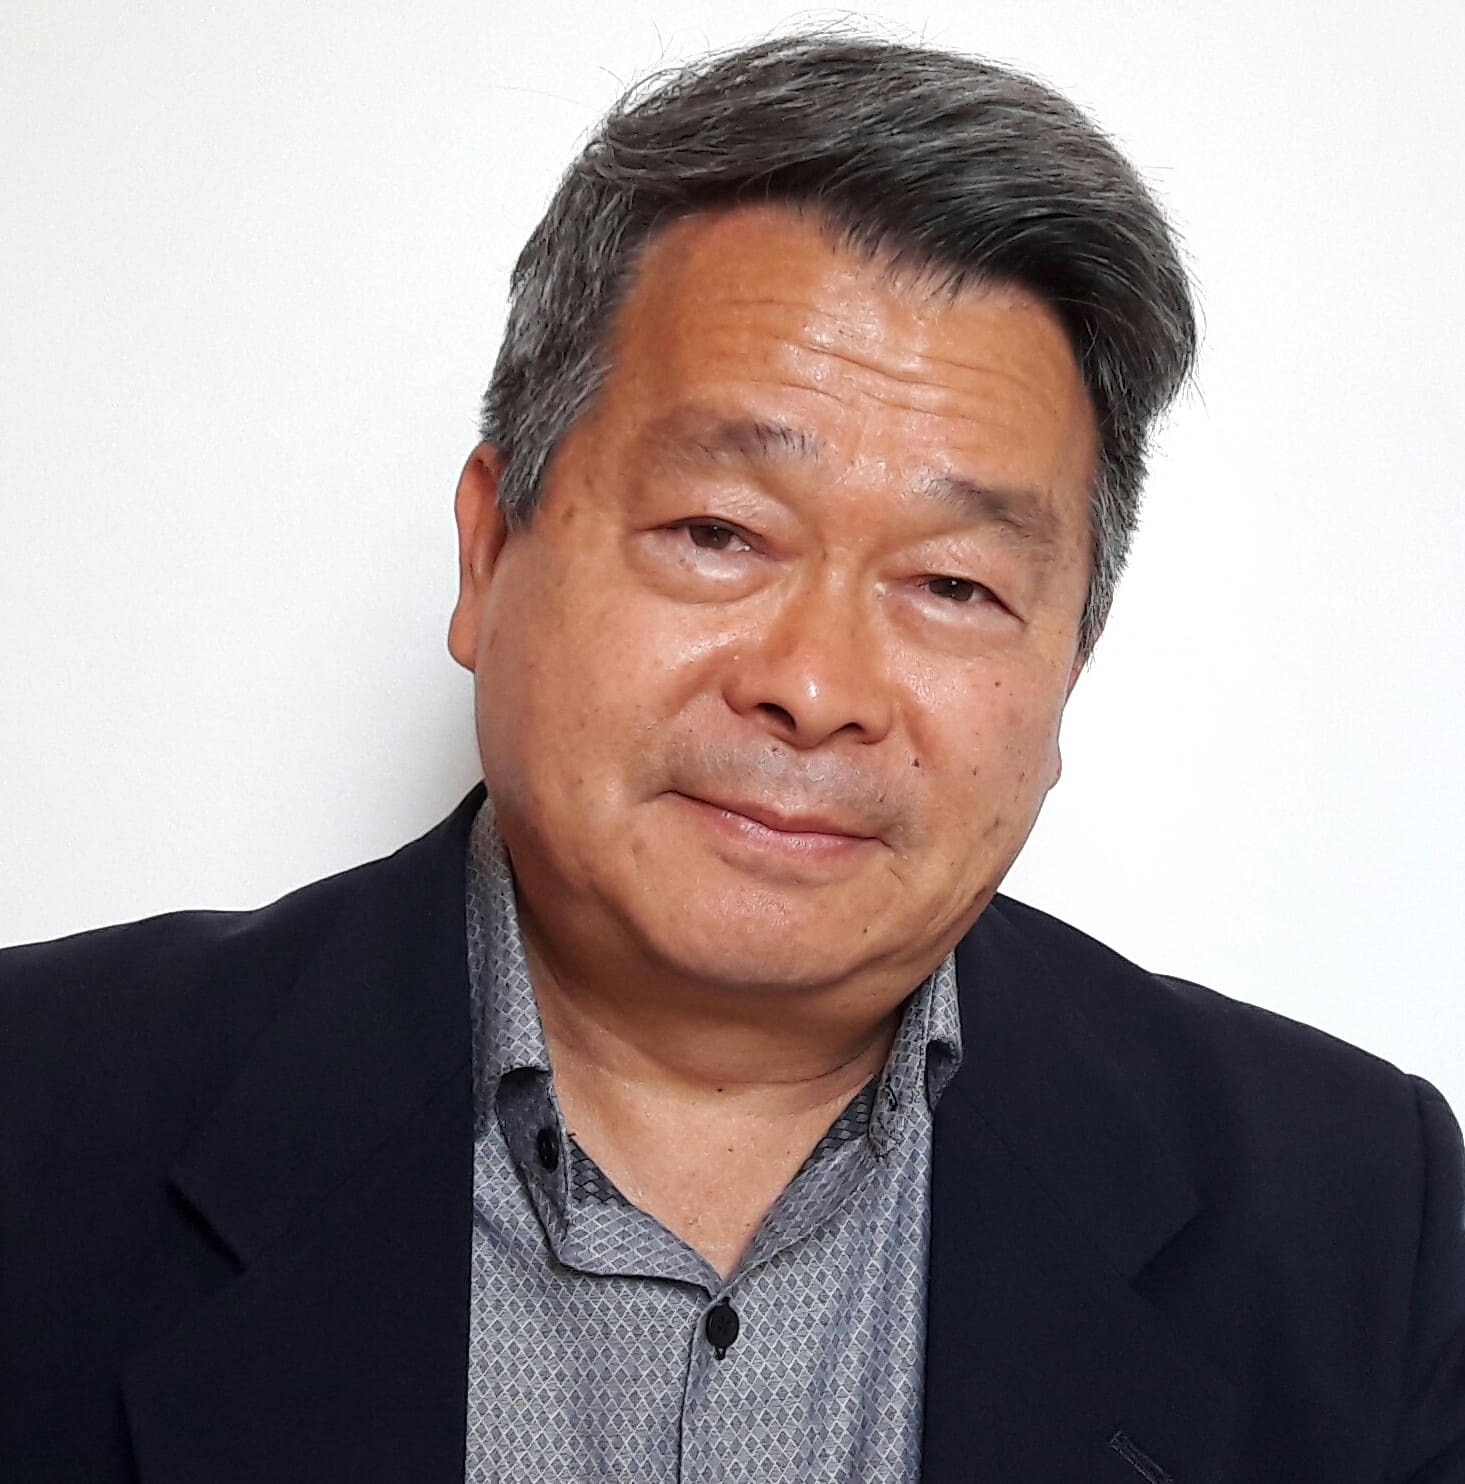 Roberto Sussumu Wataya